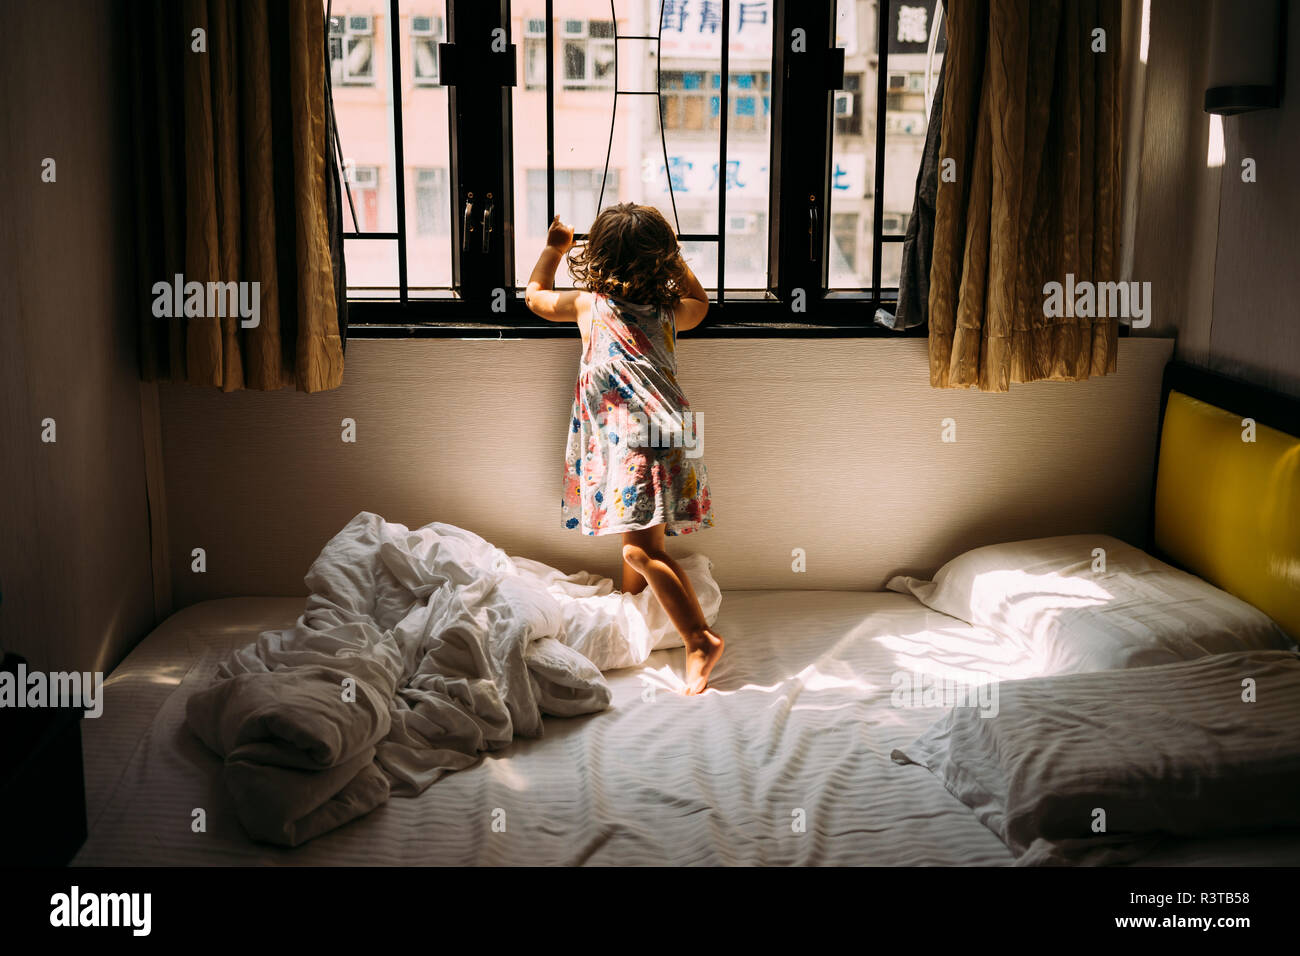 China, Hongkong, Mong Kok, zurück Blick auf kleine Mädchen stehen, barfuß auf dem Bett Blick aus Fenster Stockfoto